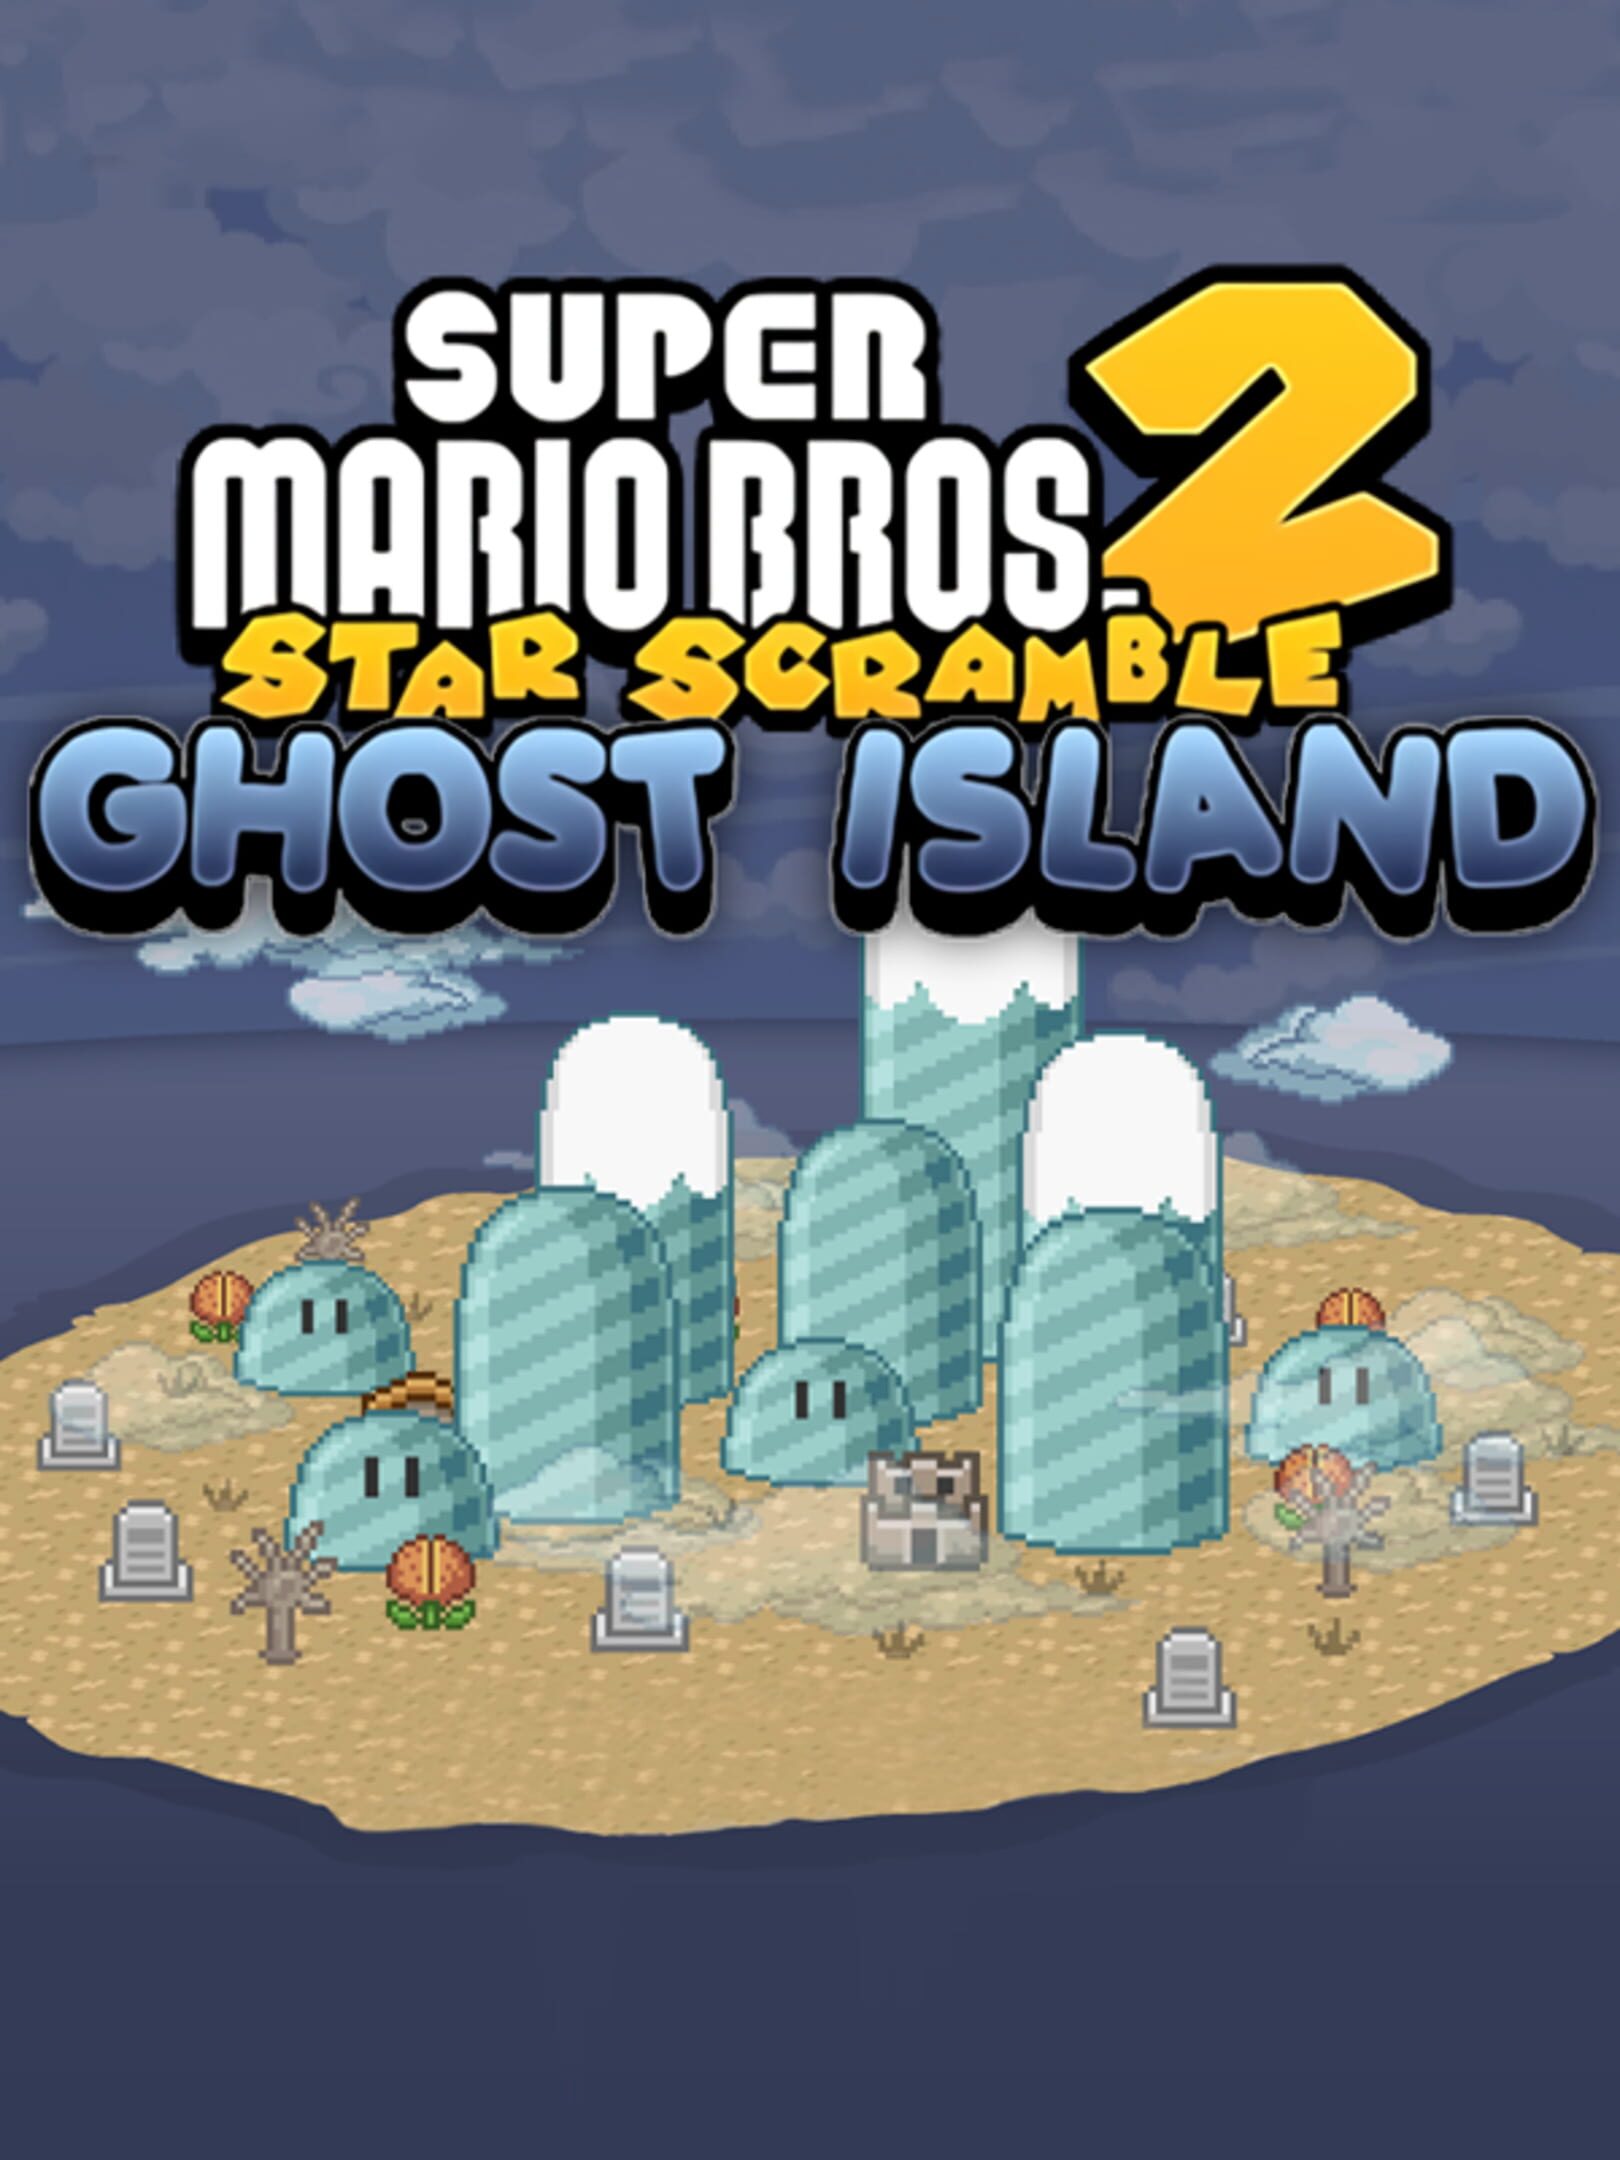 super-mario-bros-star-scramble-2-ghost-island-stash-games-tracker